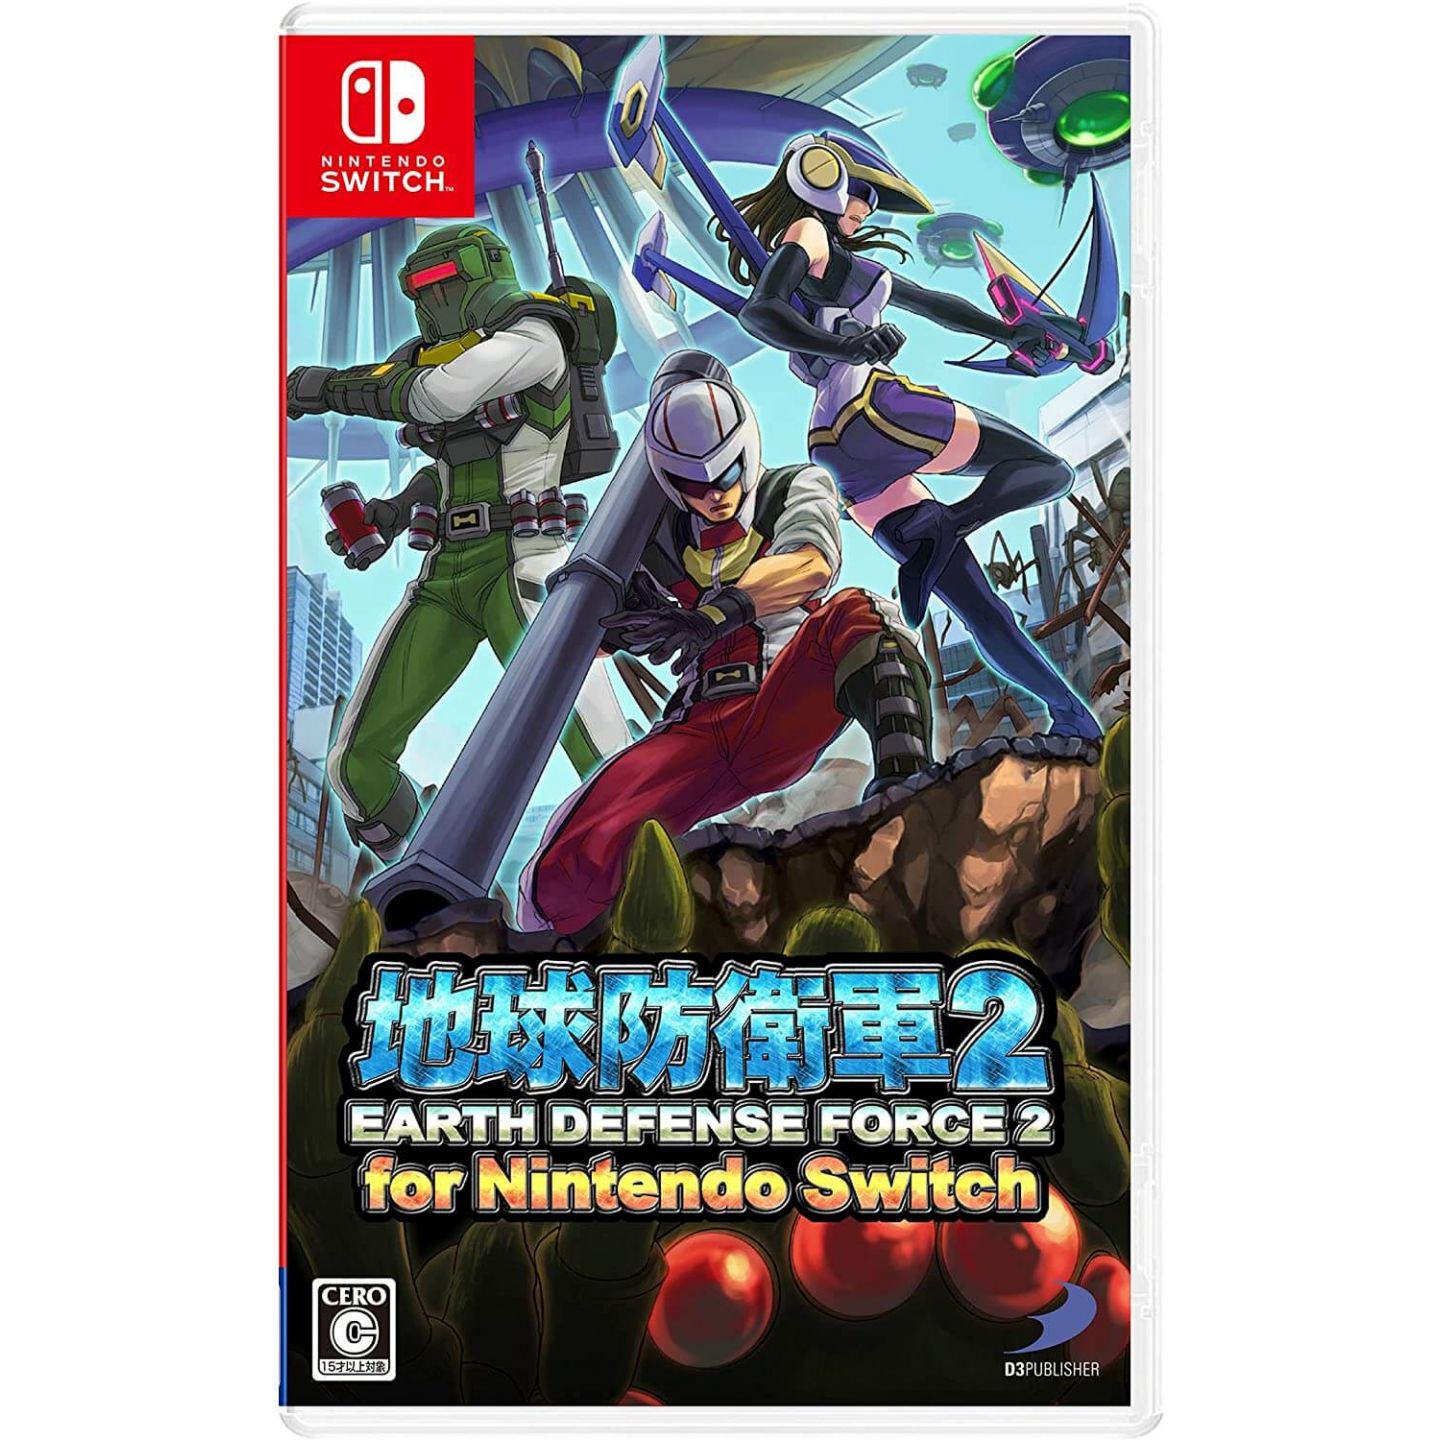 Nintendo force. Earth Defense Force:World brothers обложка. Earth Defense Force: World brothers ps4 обложка. Знание сила Нинтендо свитч. Strike Force 2 Nintendo Switch.